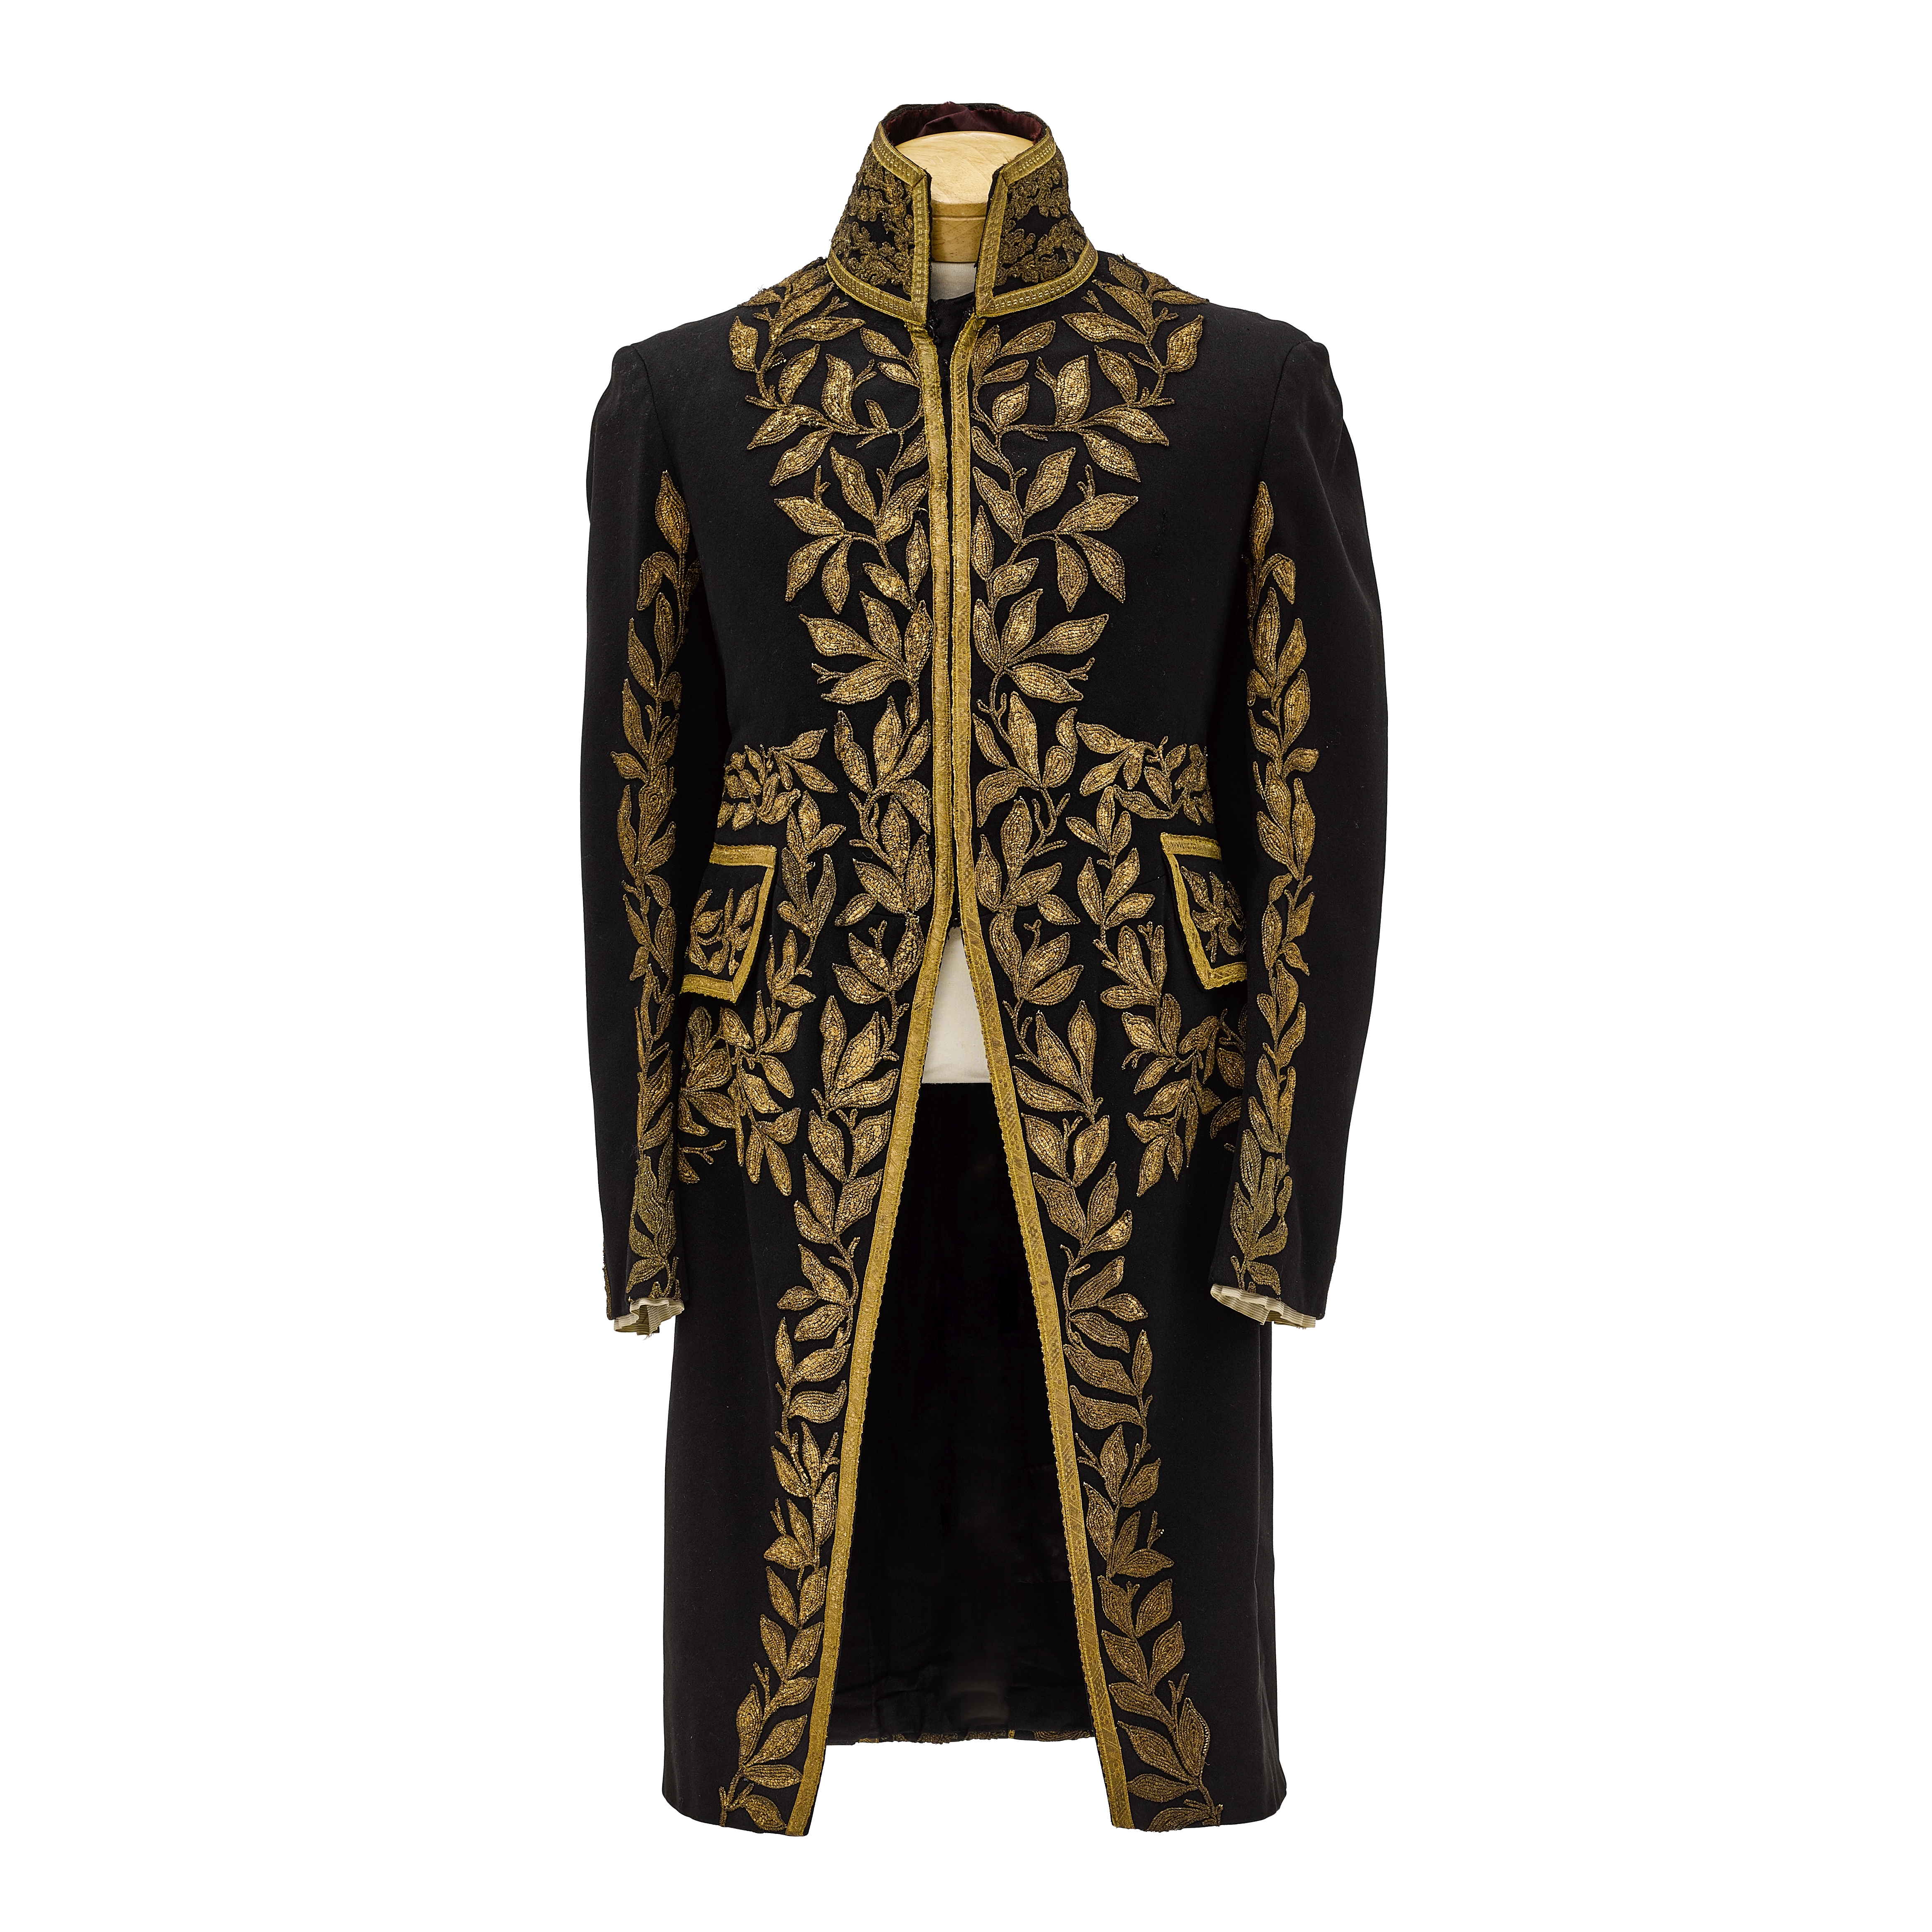 An Adolphe Menjou coat from The Great Flirtation